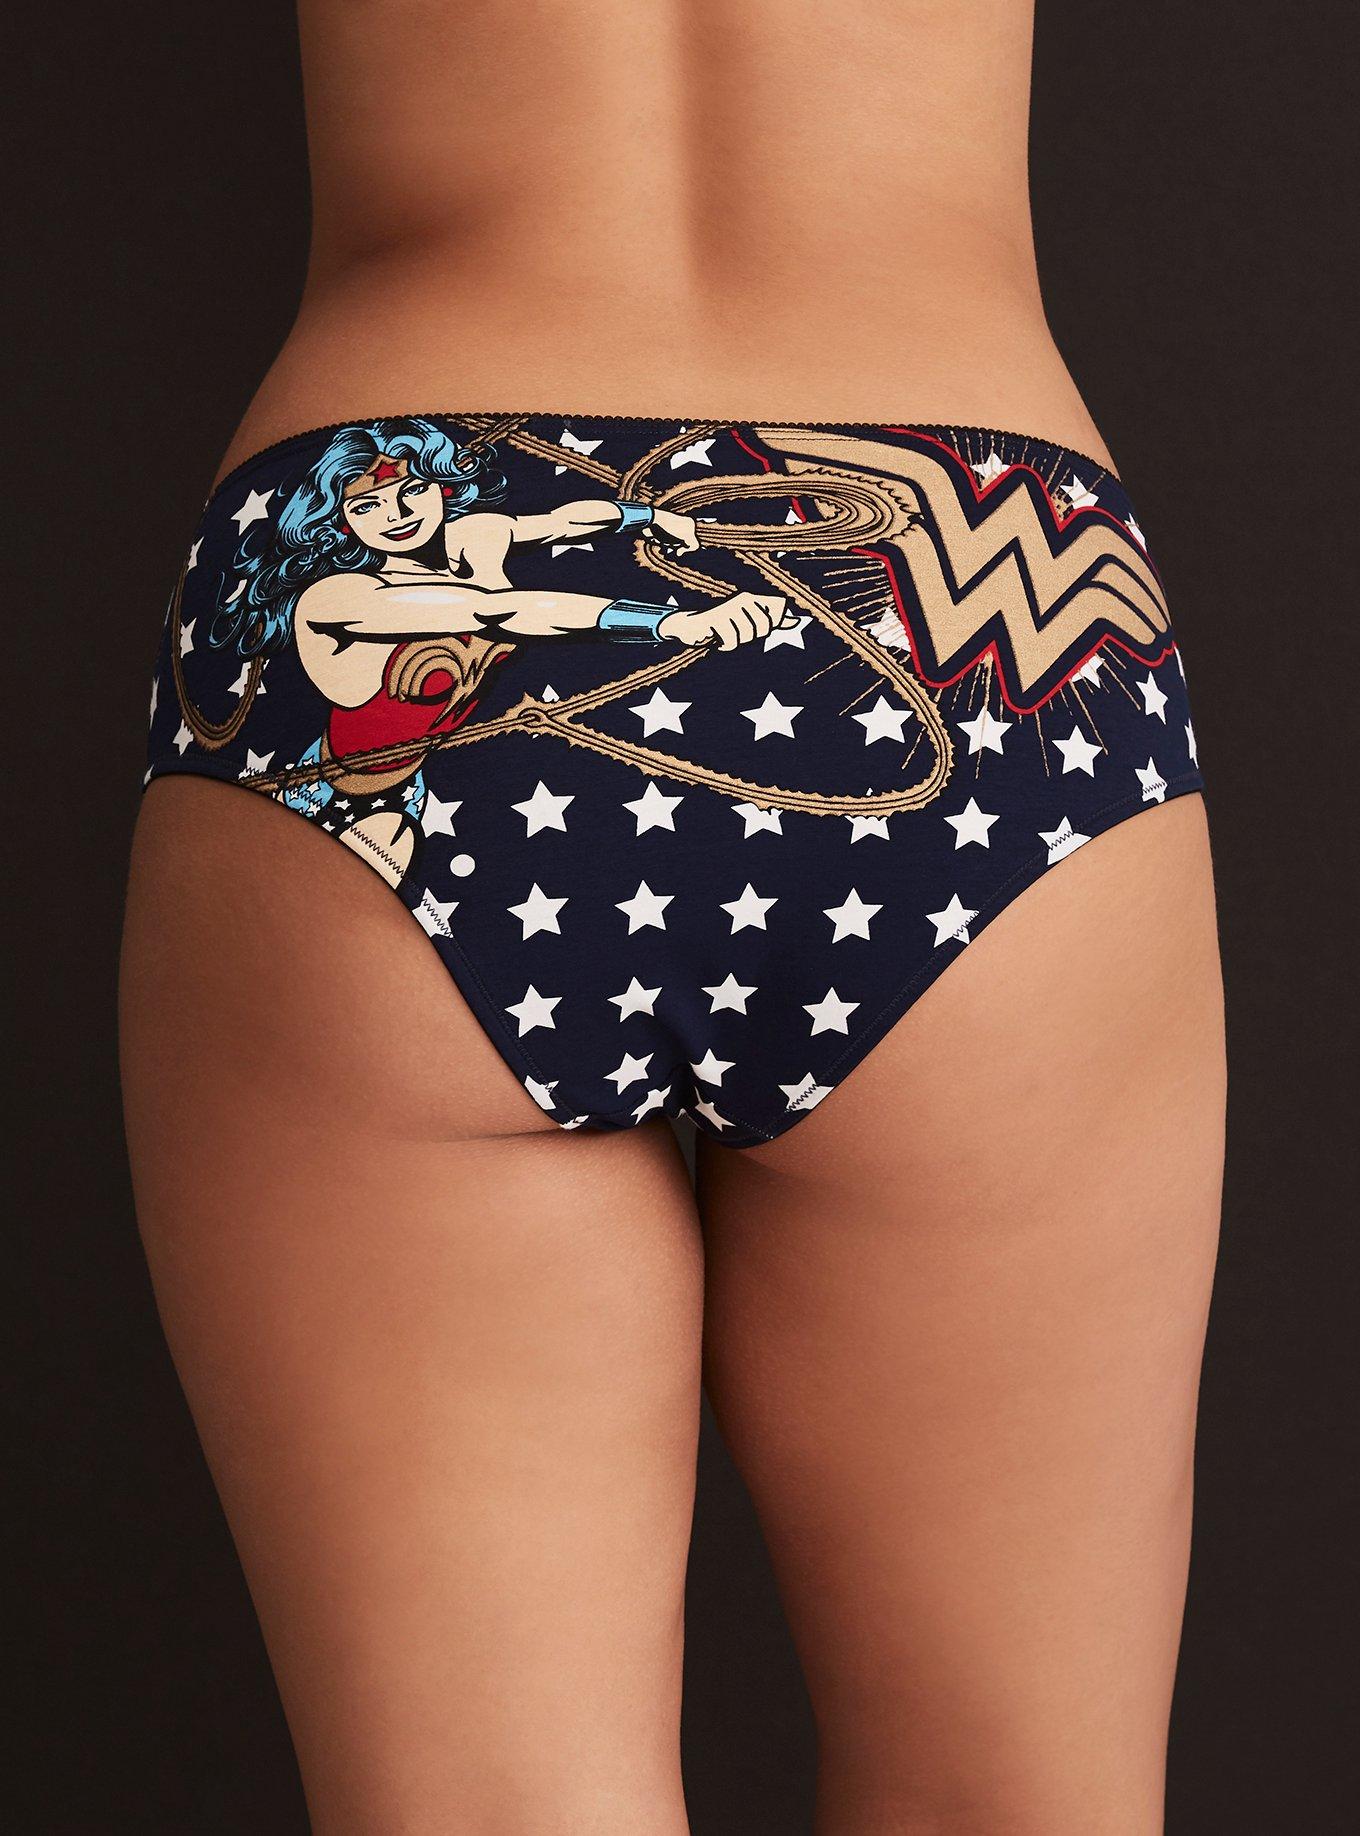 Wonder Woman Panties for Women